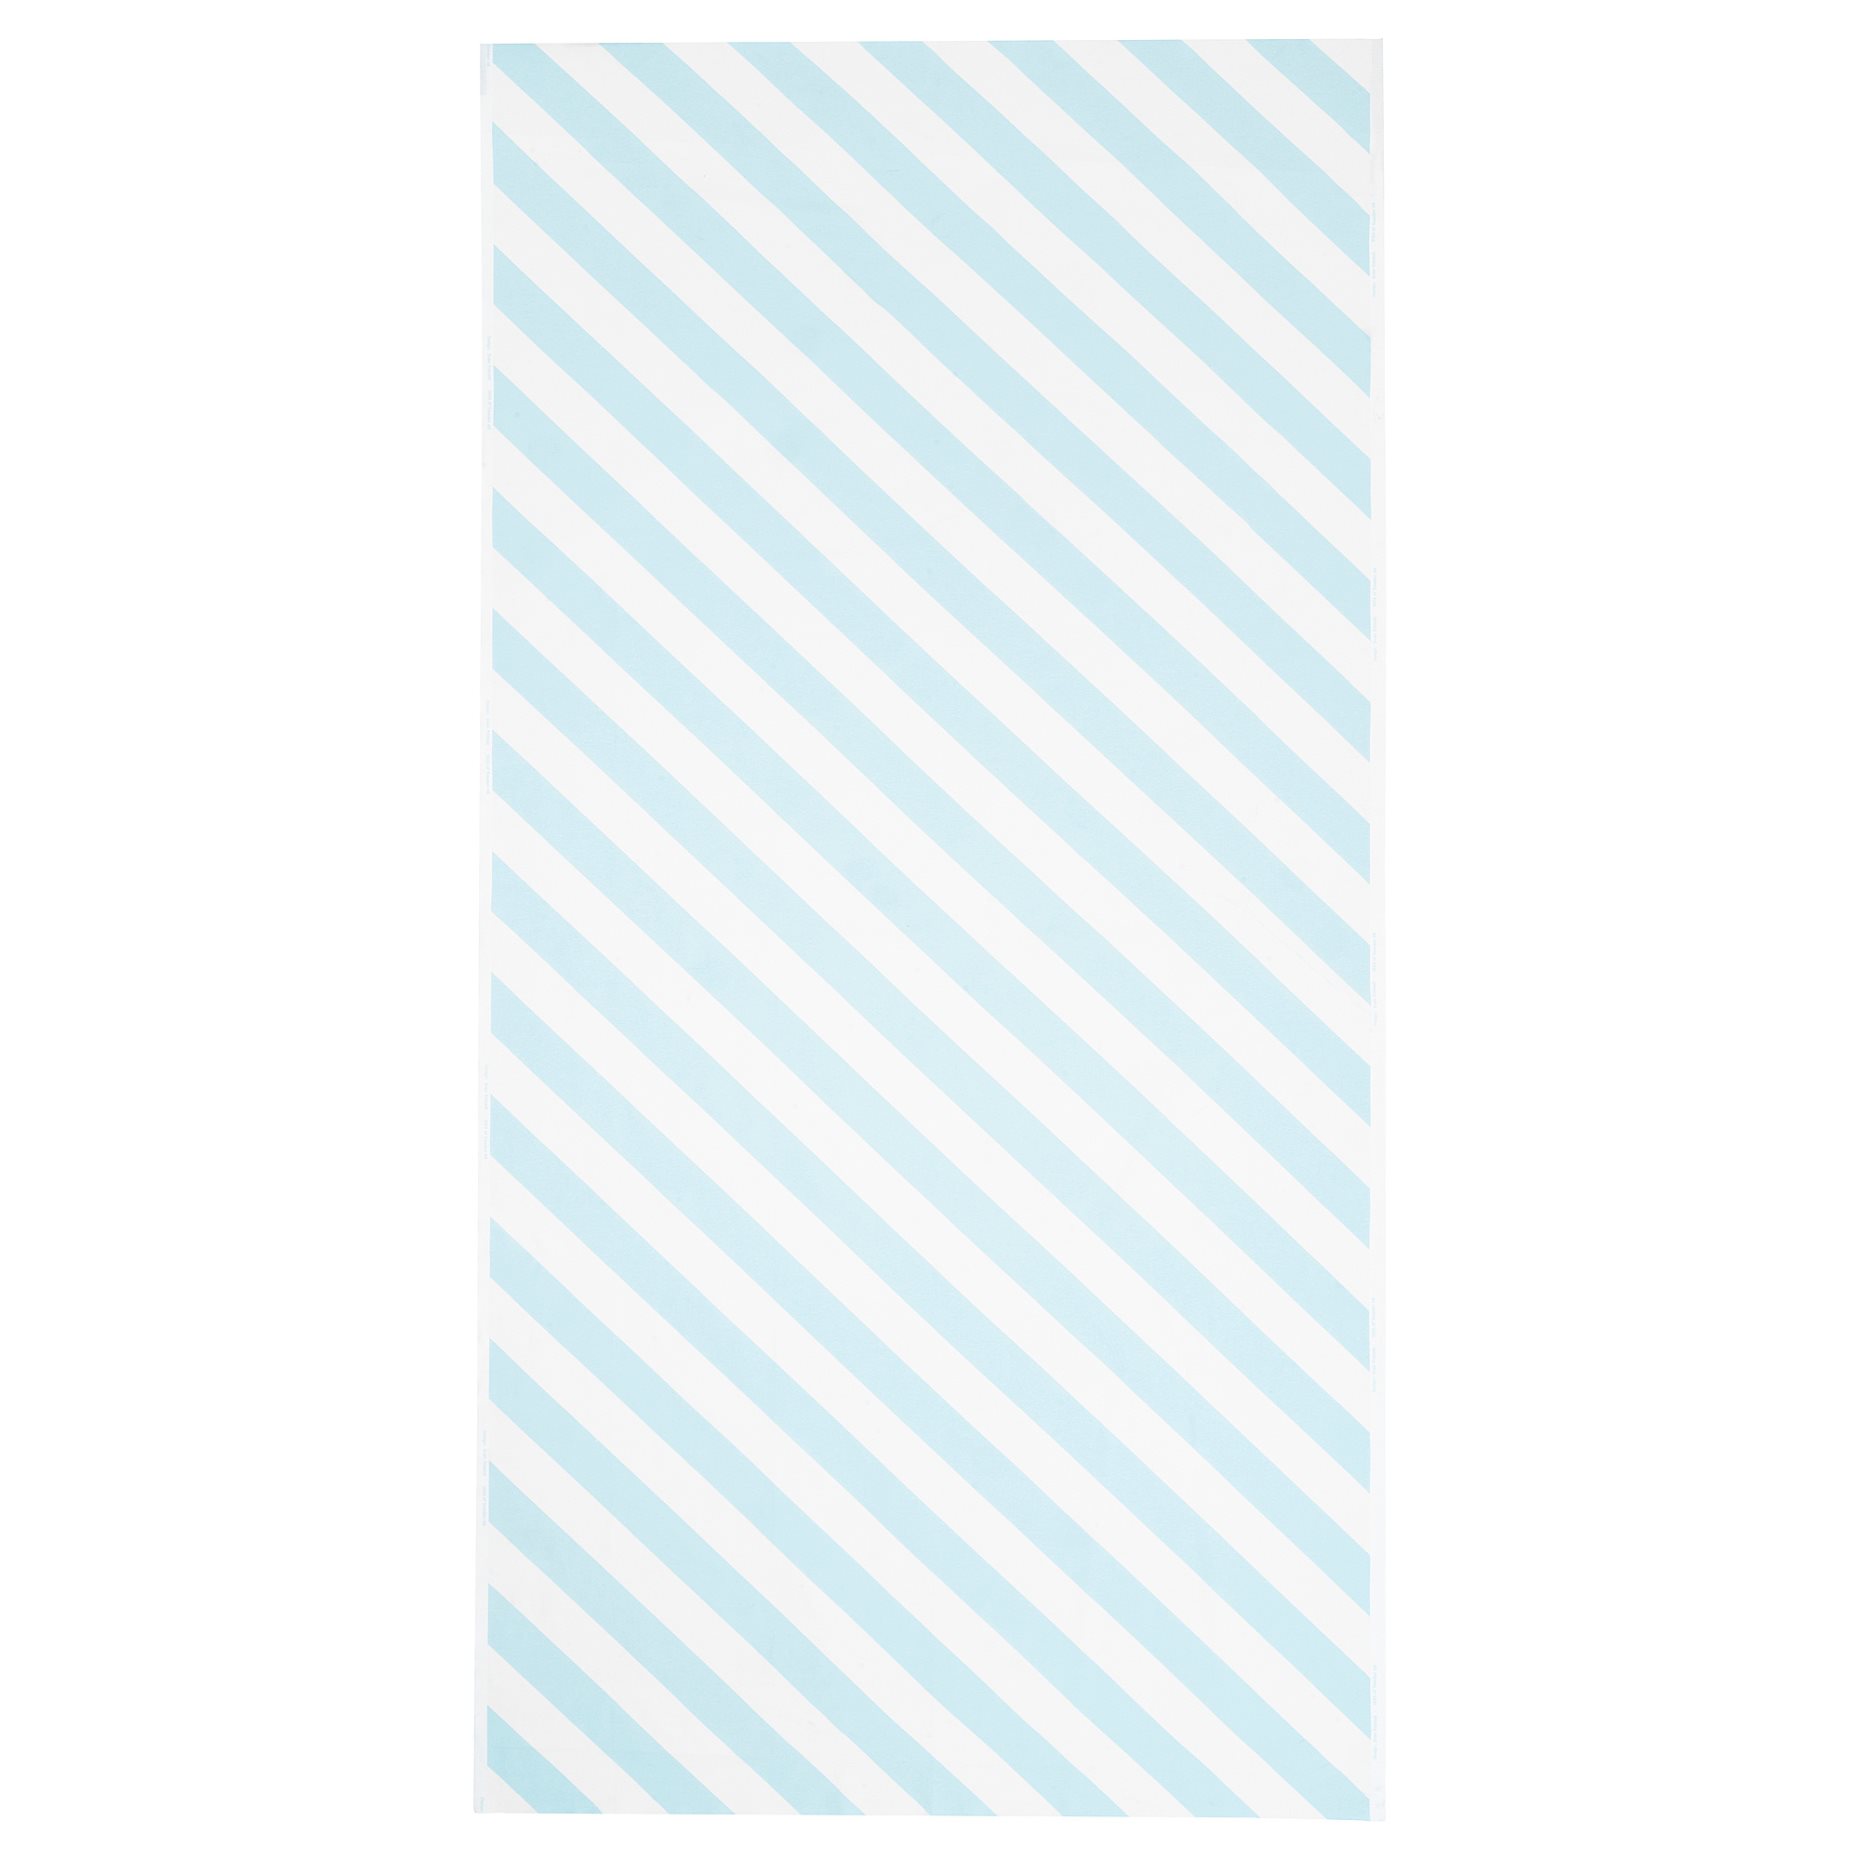 LAGERMISPEL, pre-cut fabric/stripe, 150x300 cm, 205.551.74